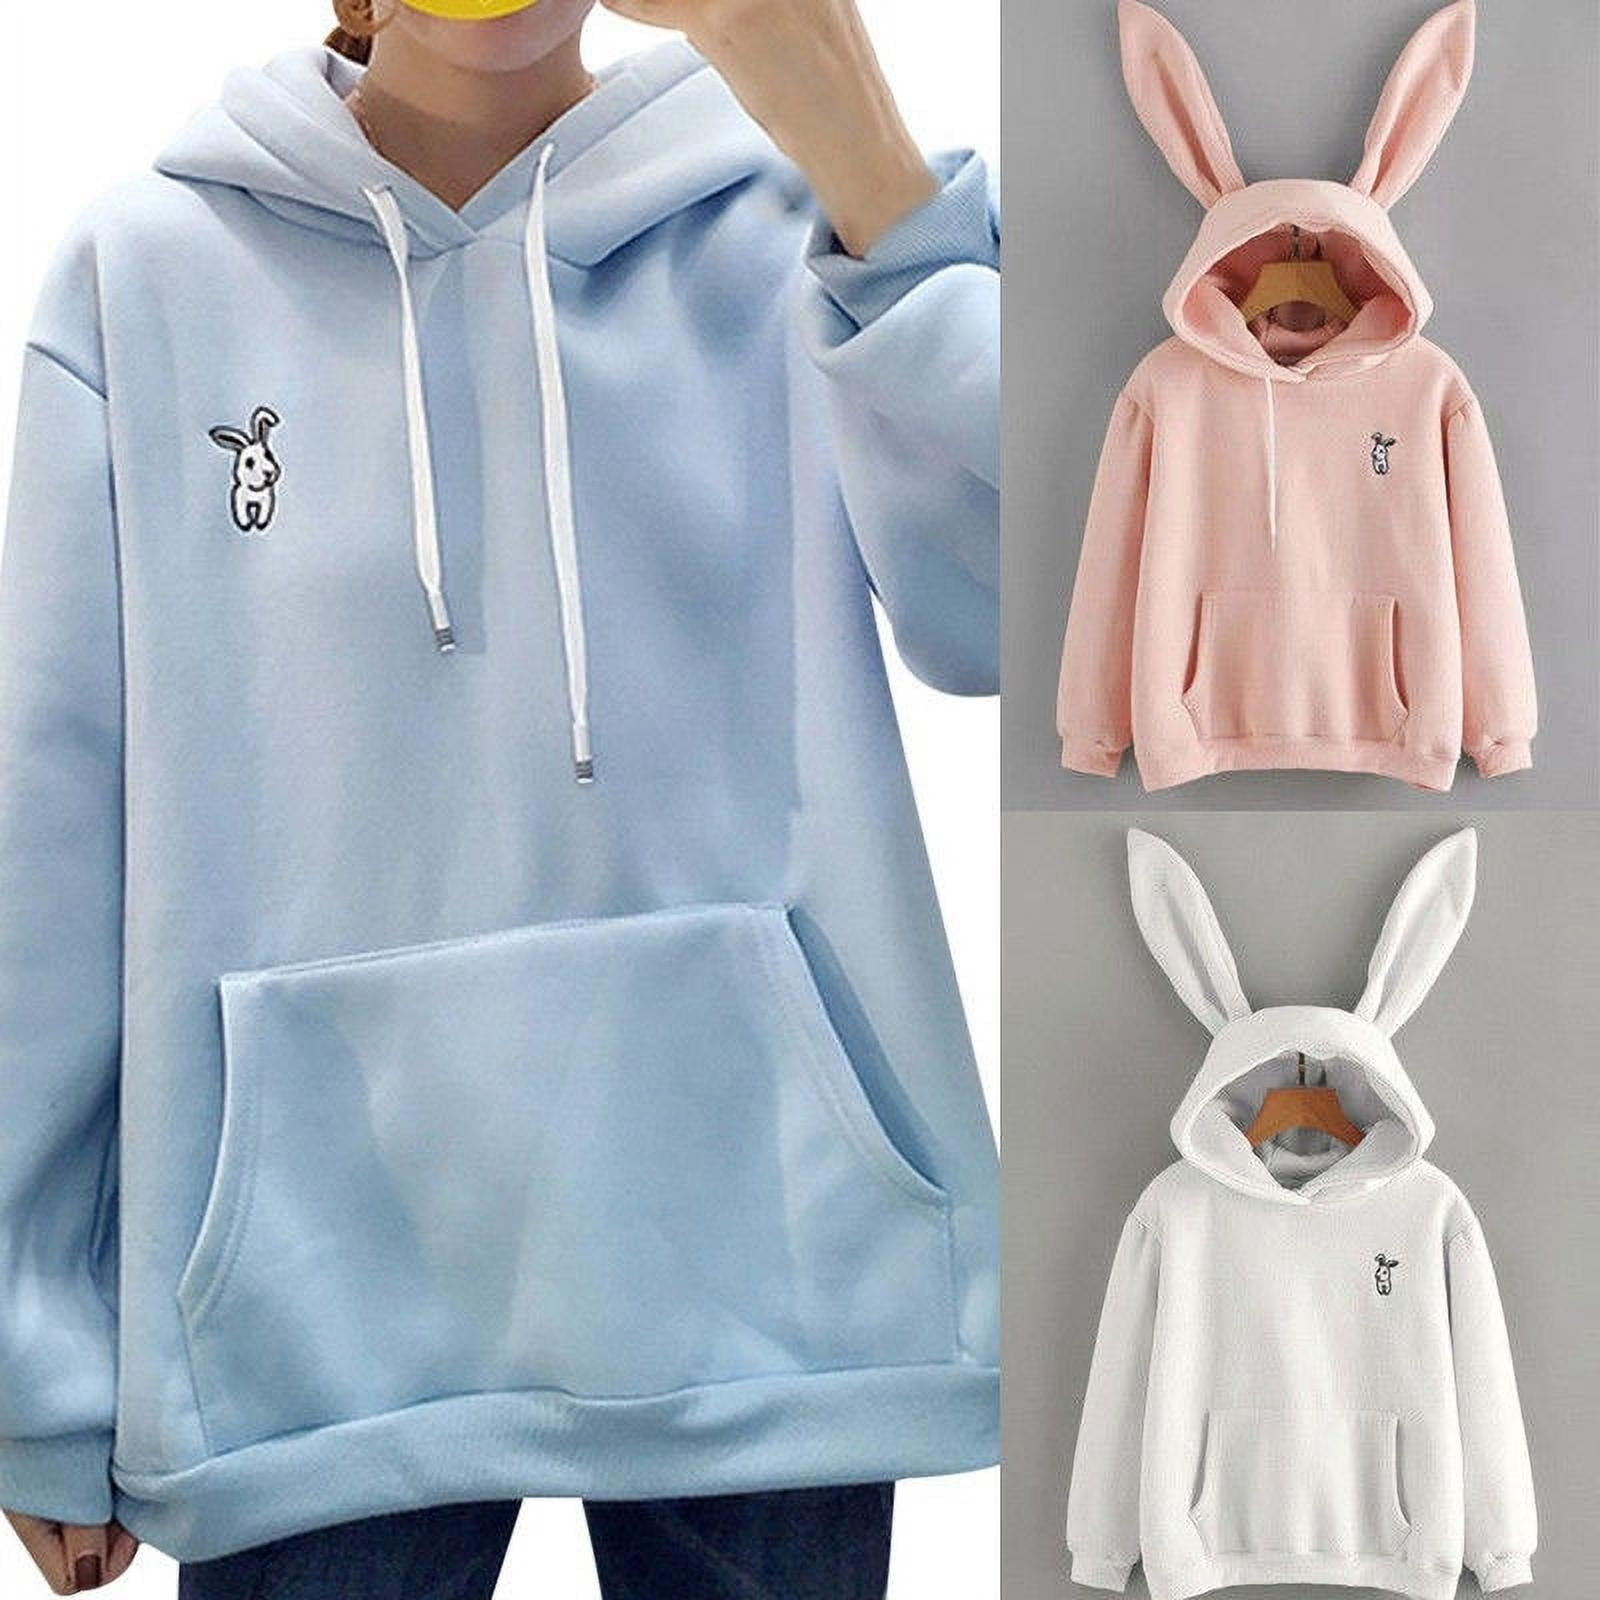 siilsaa Hoodies for Women Teen Girls Bunny Hoodie with Ears Tunic Sweatshirts Loose Long Sleeve Pullover Tops Blouse 